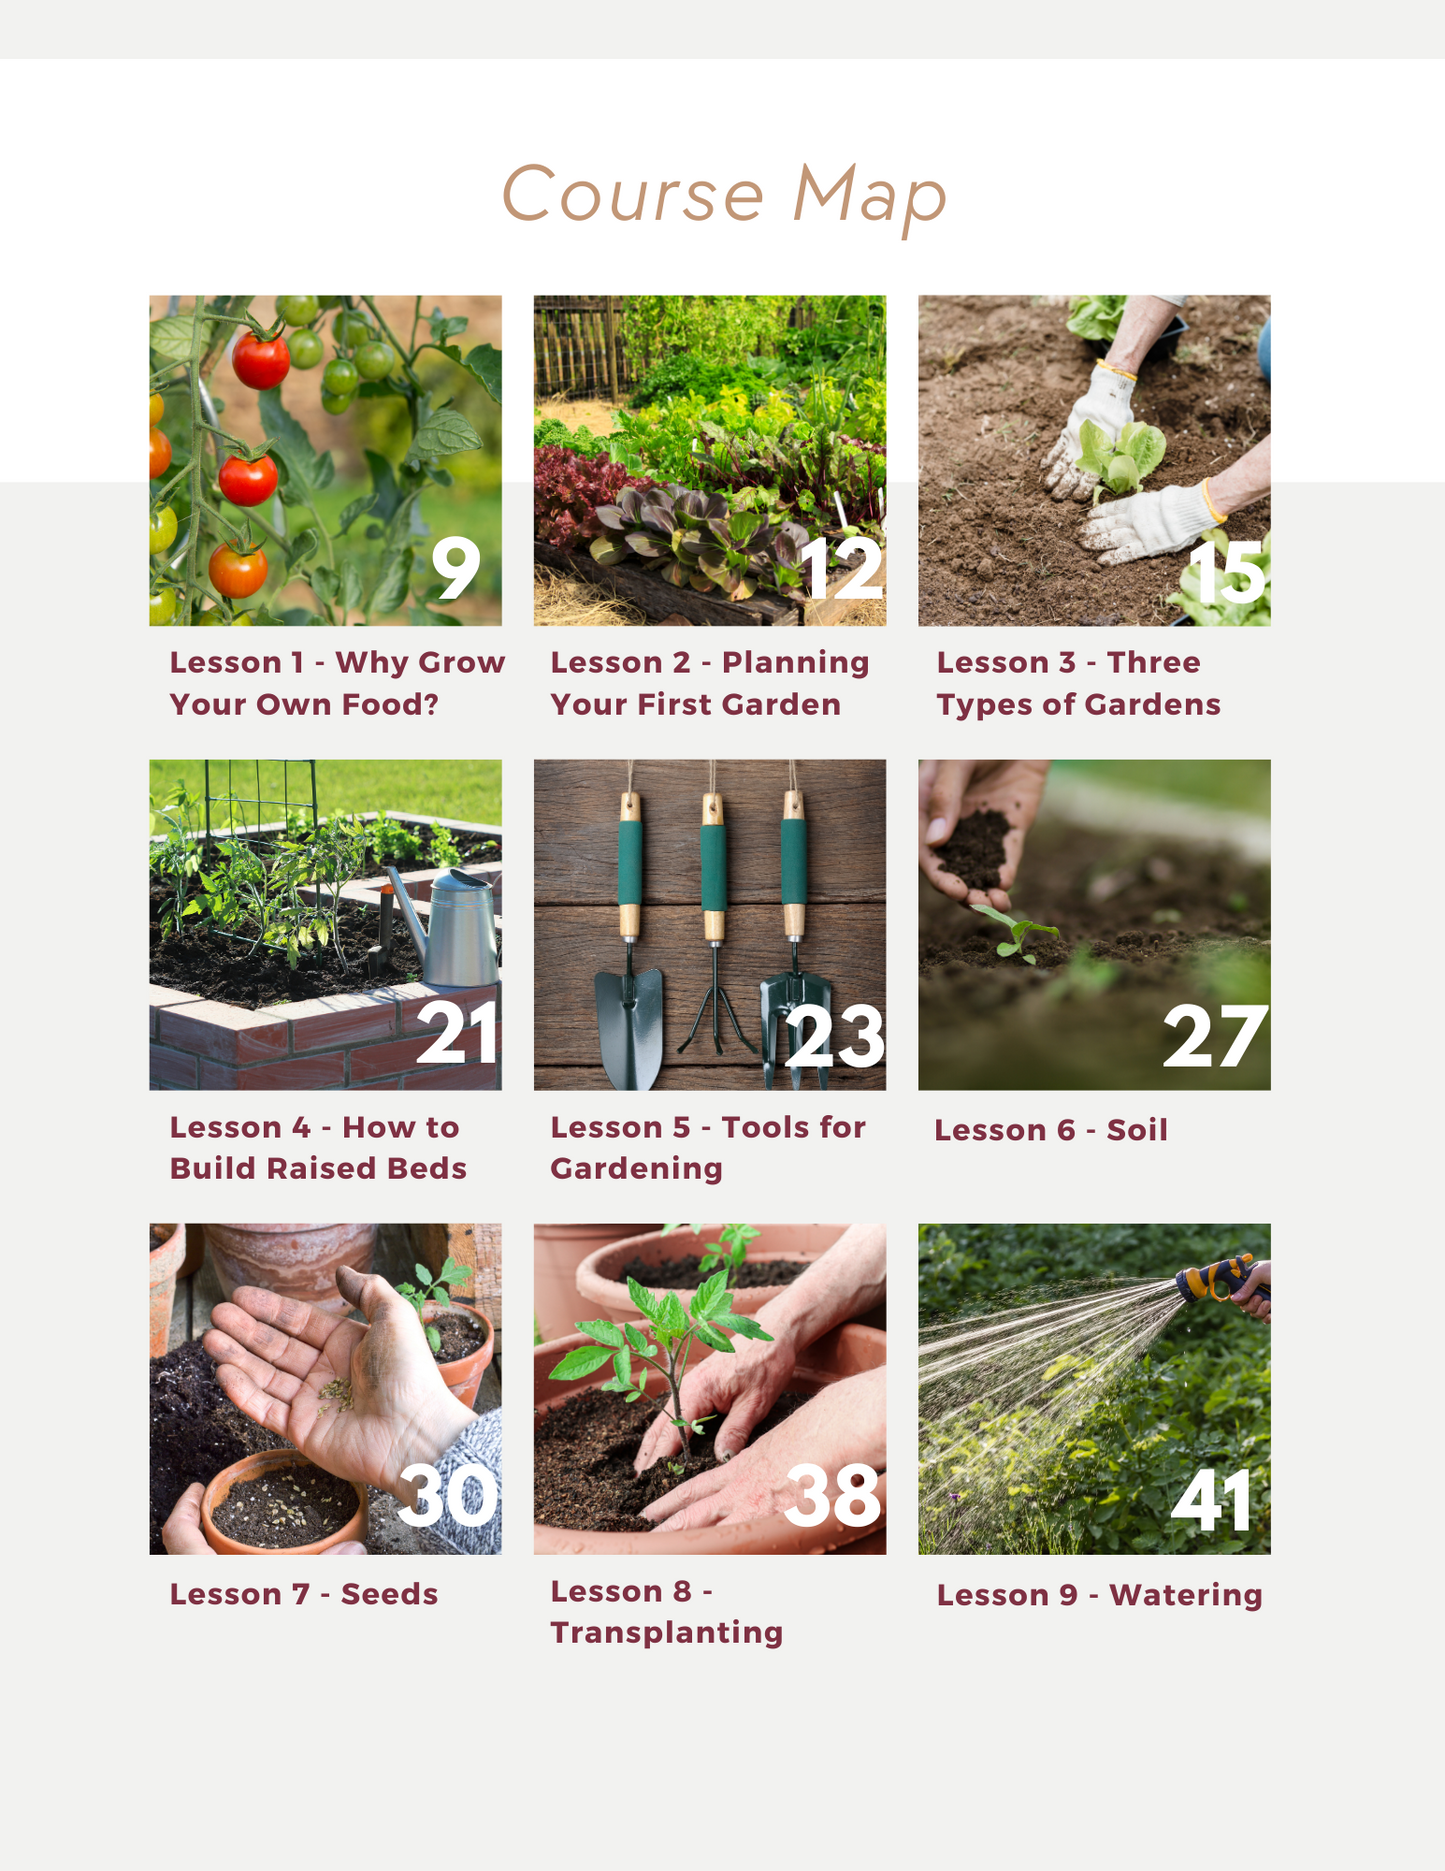 Grow Food: Backyard Gardening 101